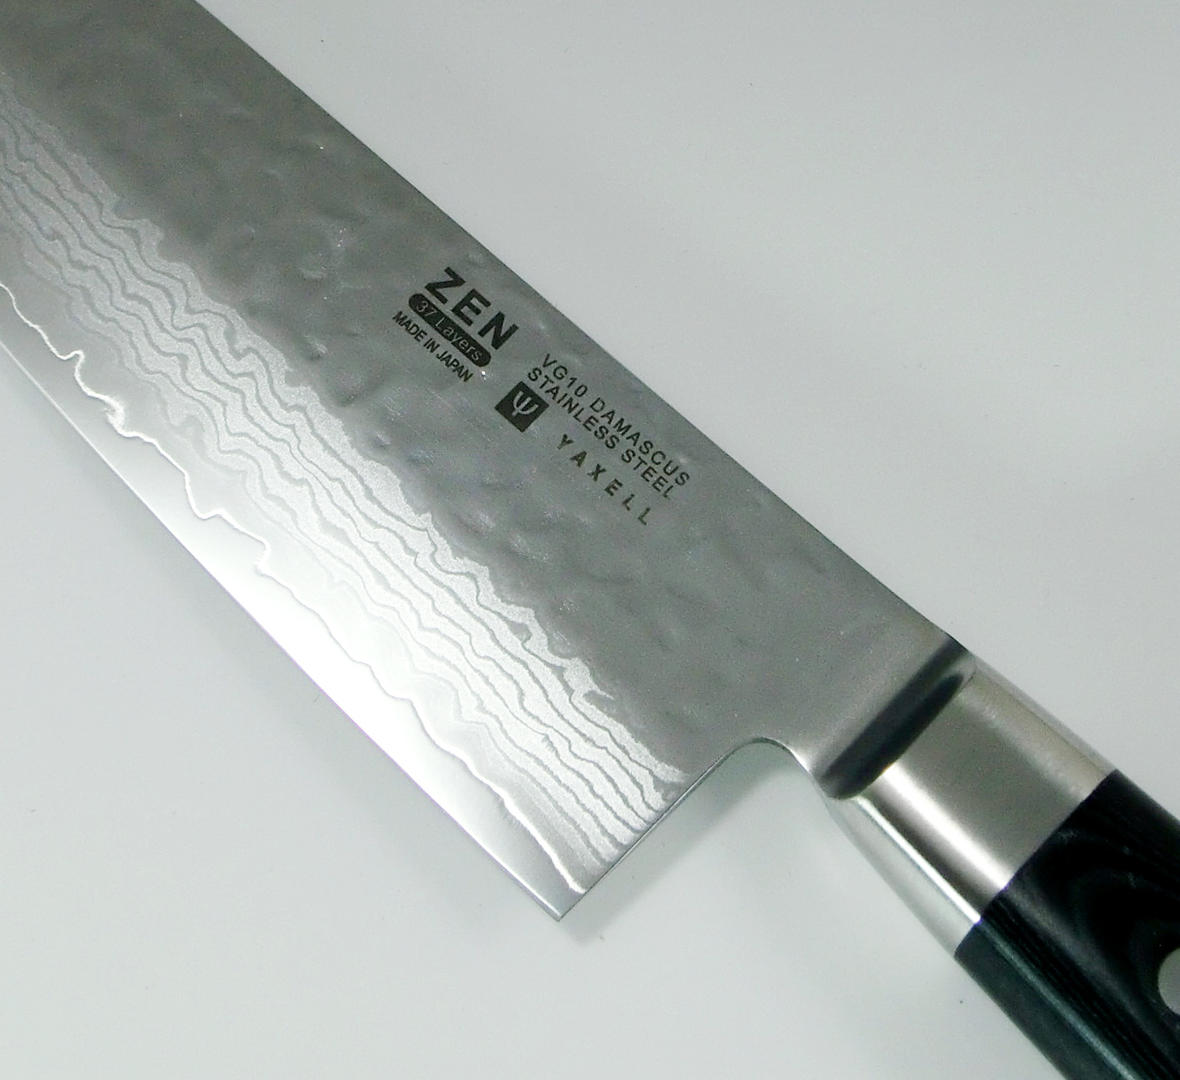 https://cdn11.bigcommerce.com/s-attnwxa/images/stencil/original/products/103/186052/yaxell-yaxell-zen-37-layer-vg10-damascus-hammered-japanese-chefs-gyuto-knife-200mm__99026.1635509444.jpg?c=2&imbypass=on&imbypass=on